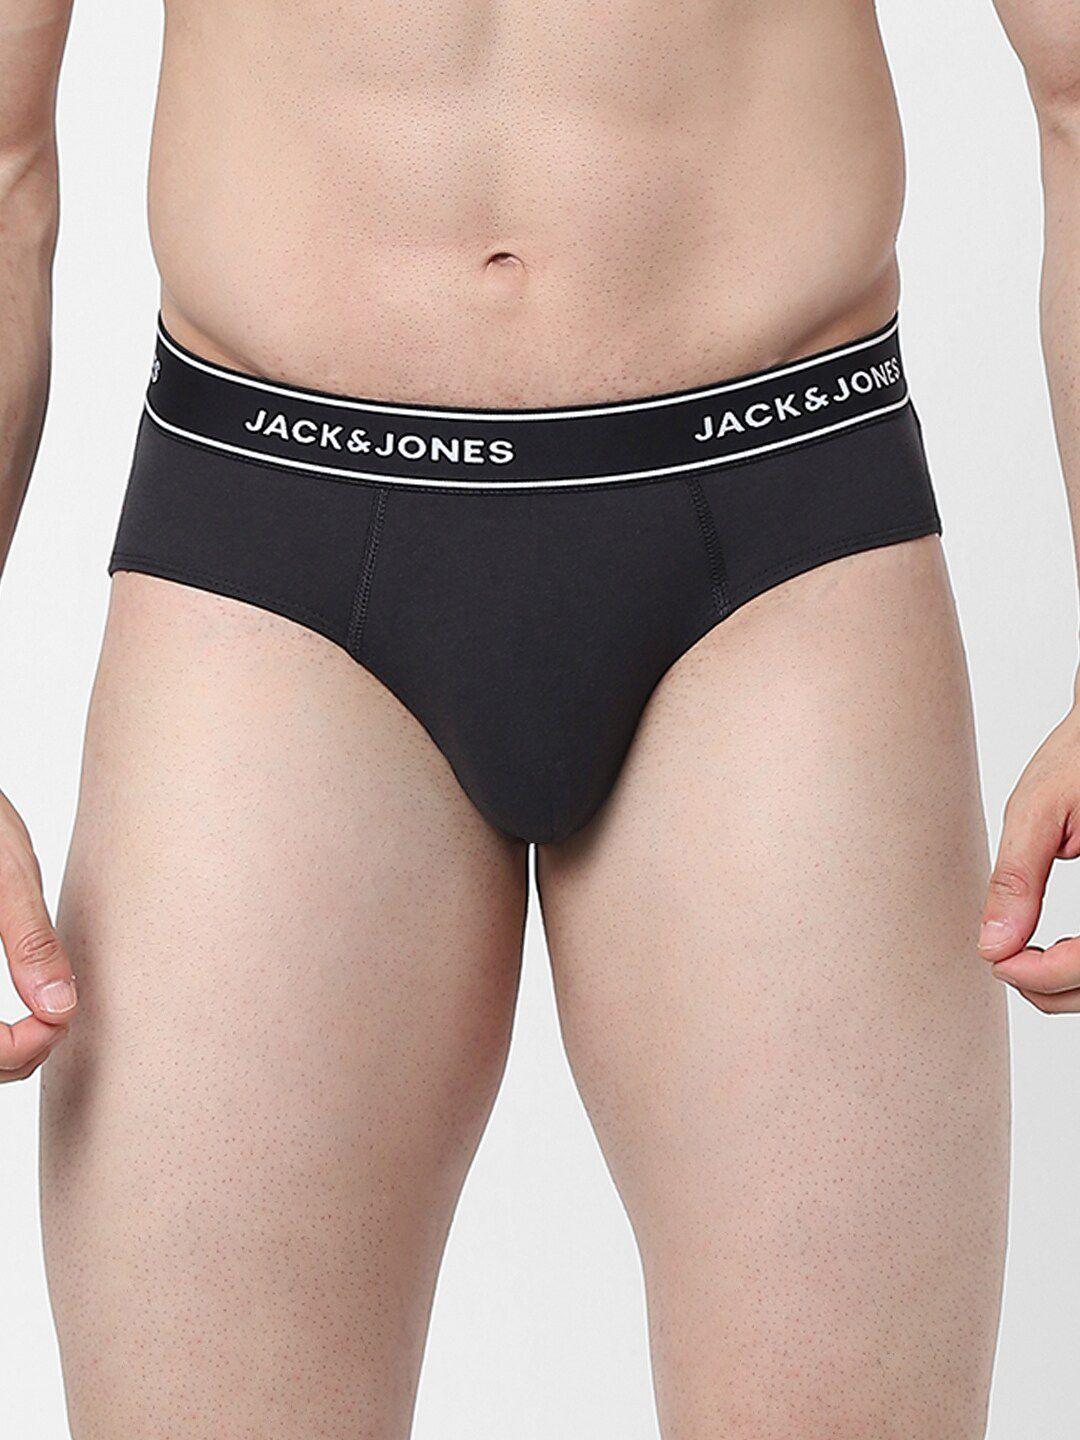 jack-&-jones-men-solid-basic-cotton-briefs